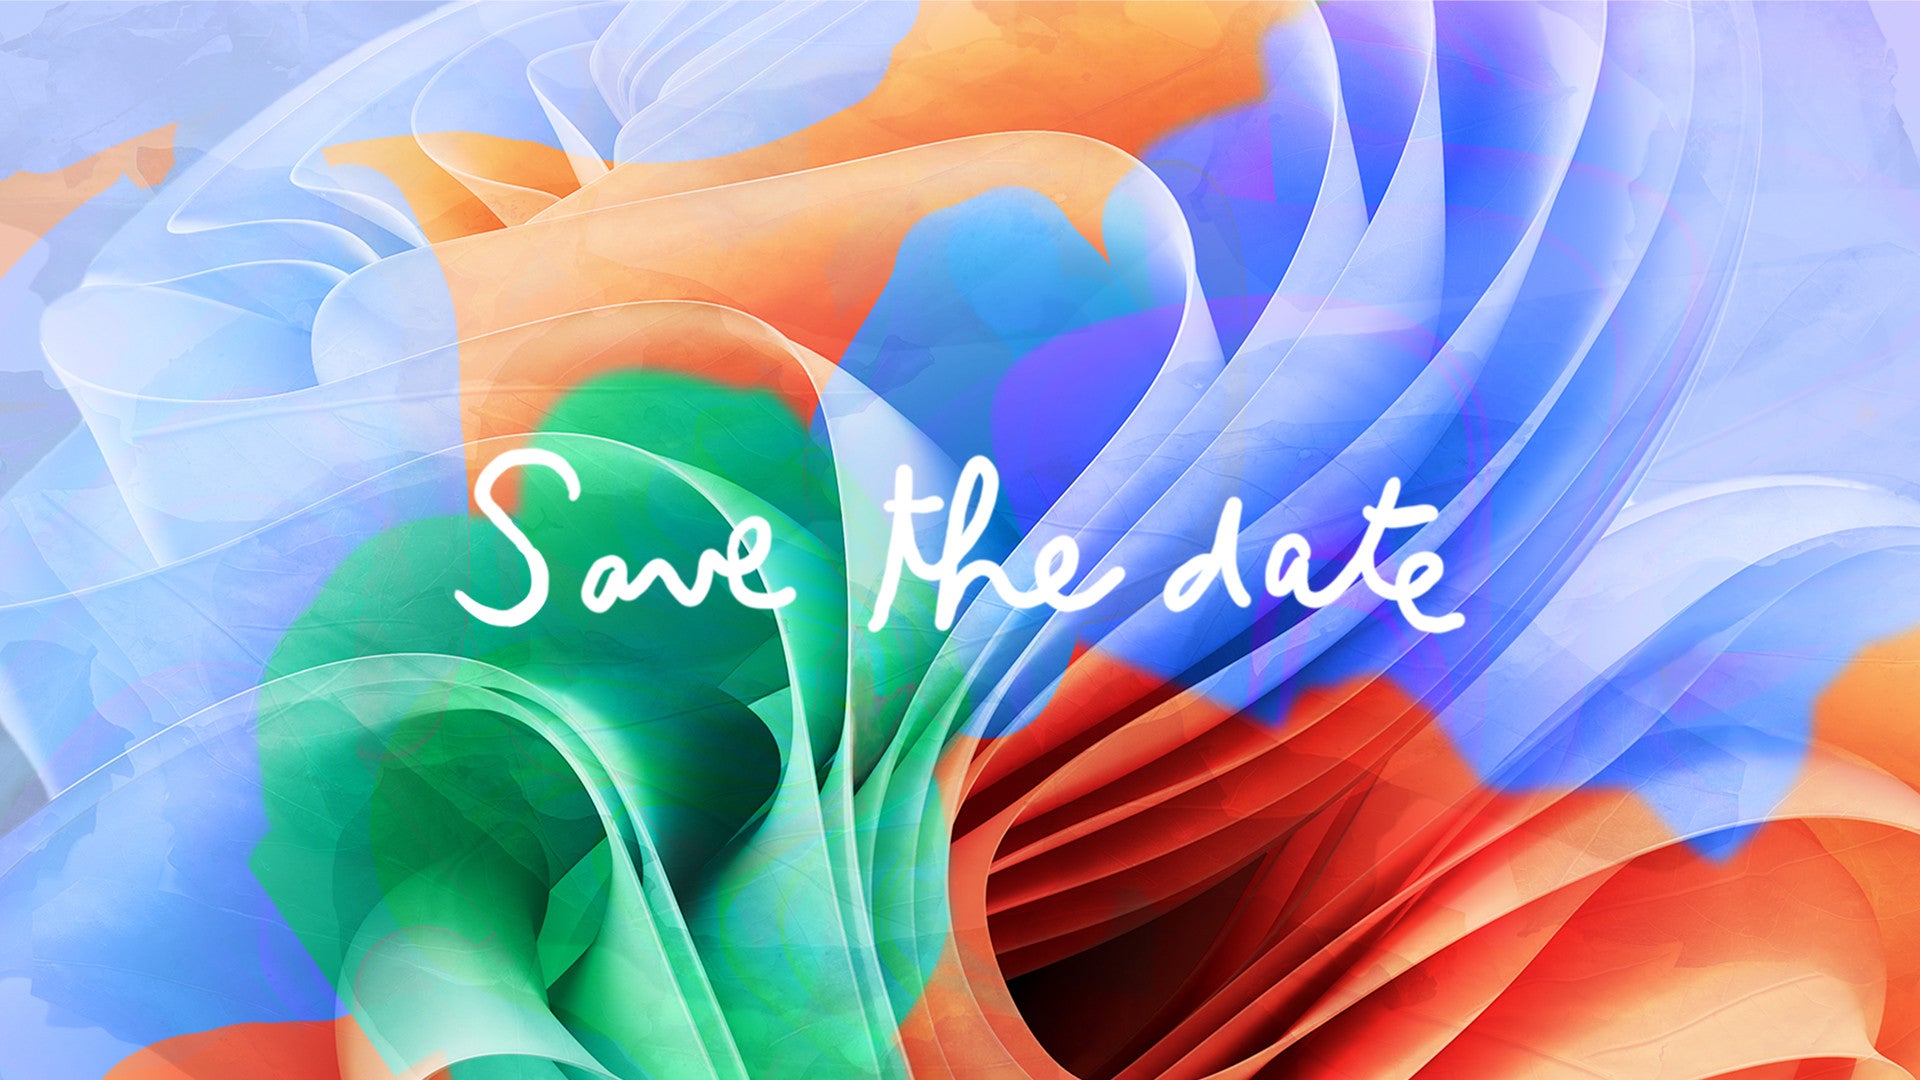 Microsoft’s ‘Save The Date’ invitation